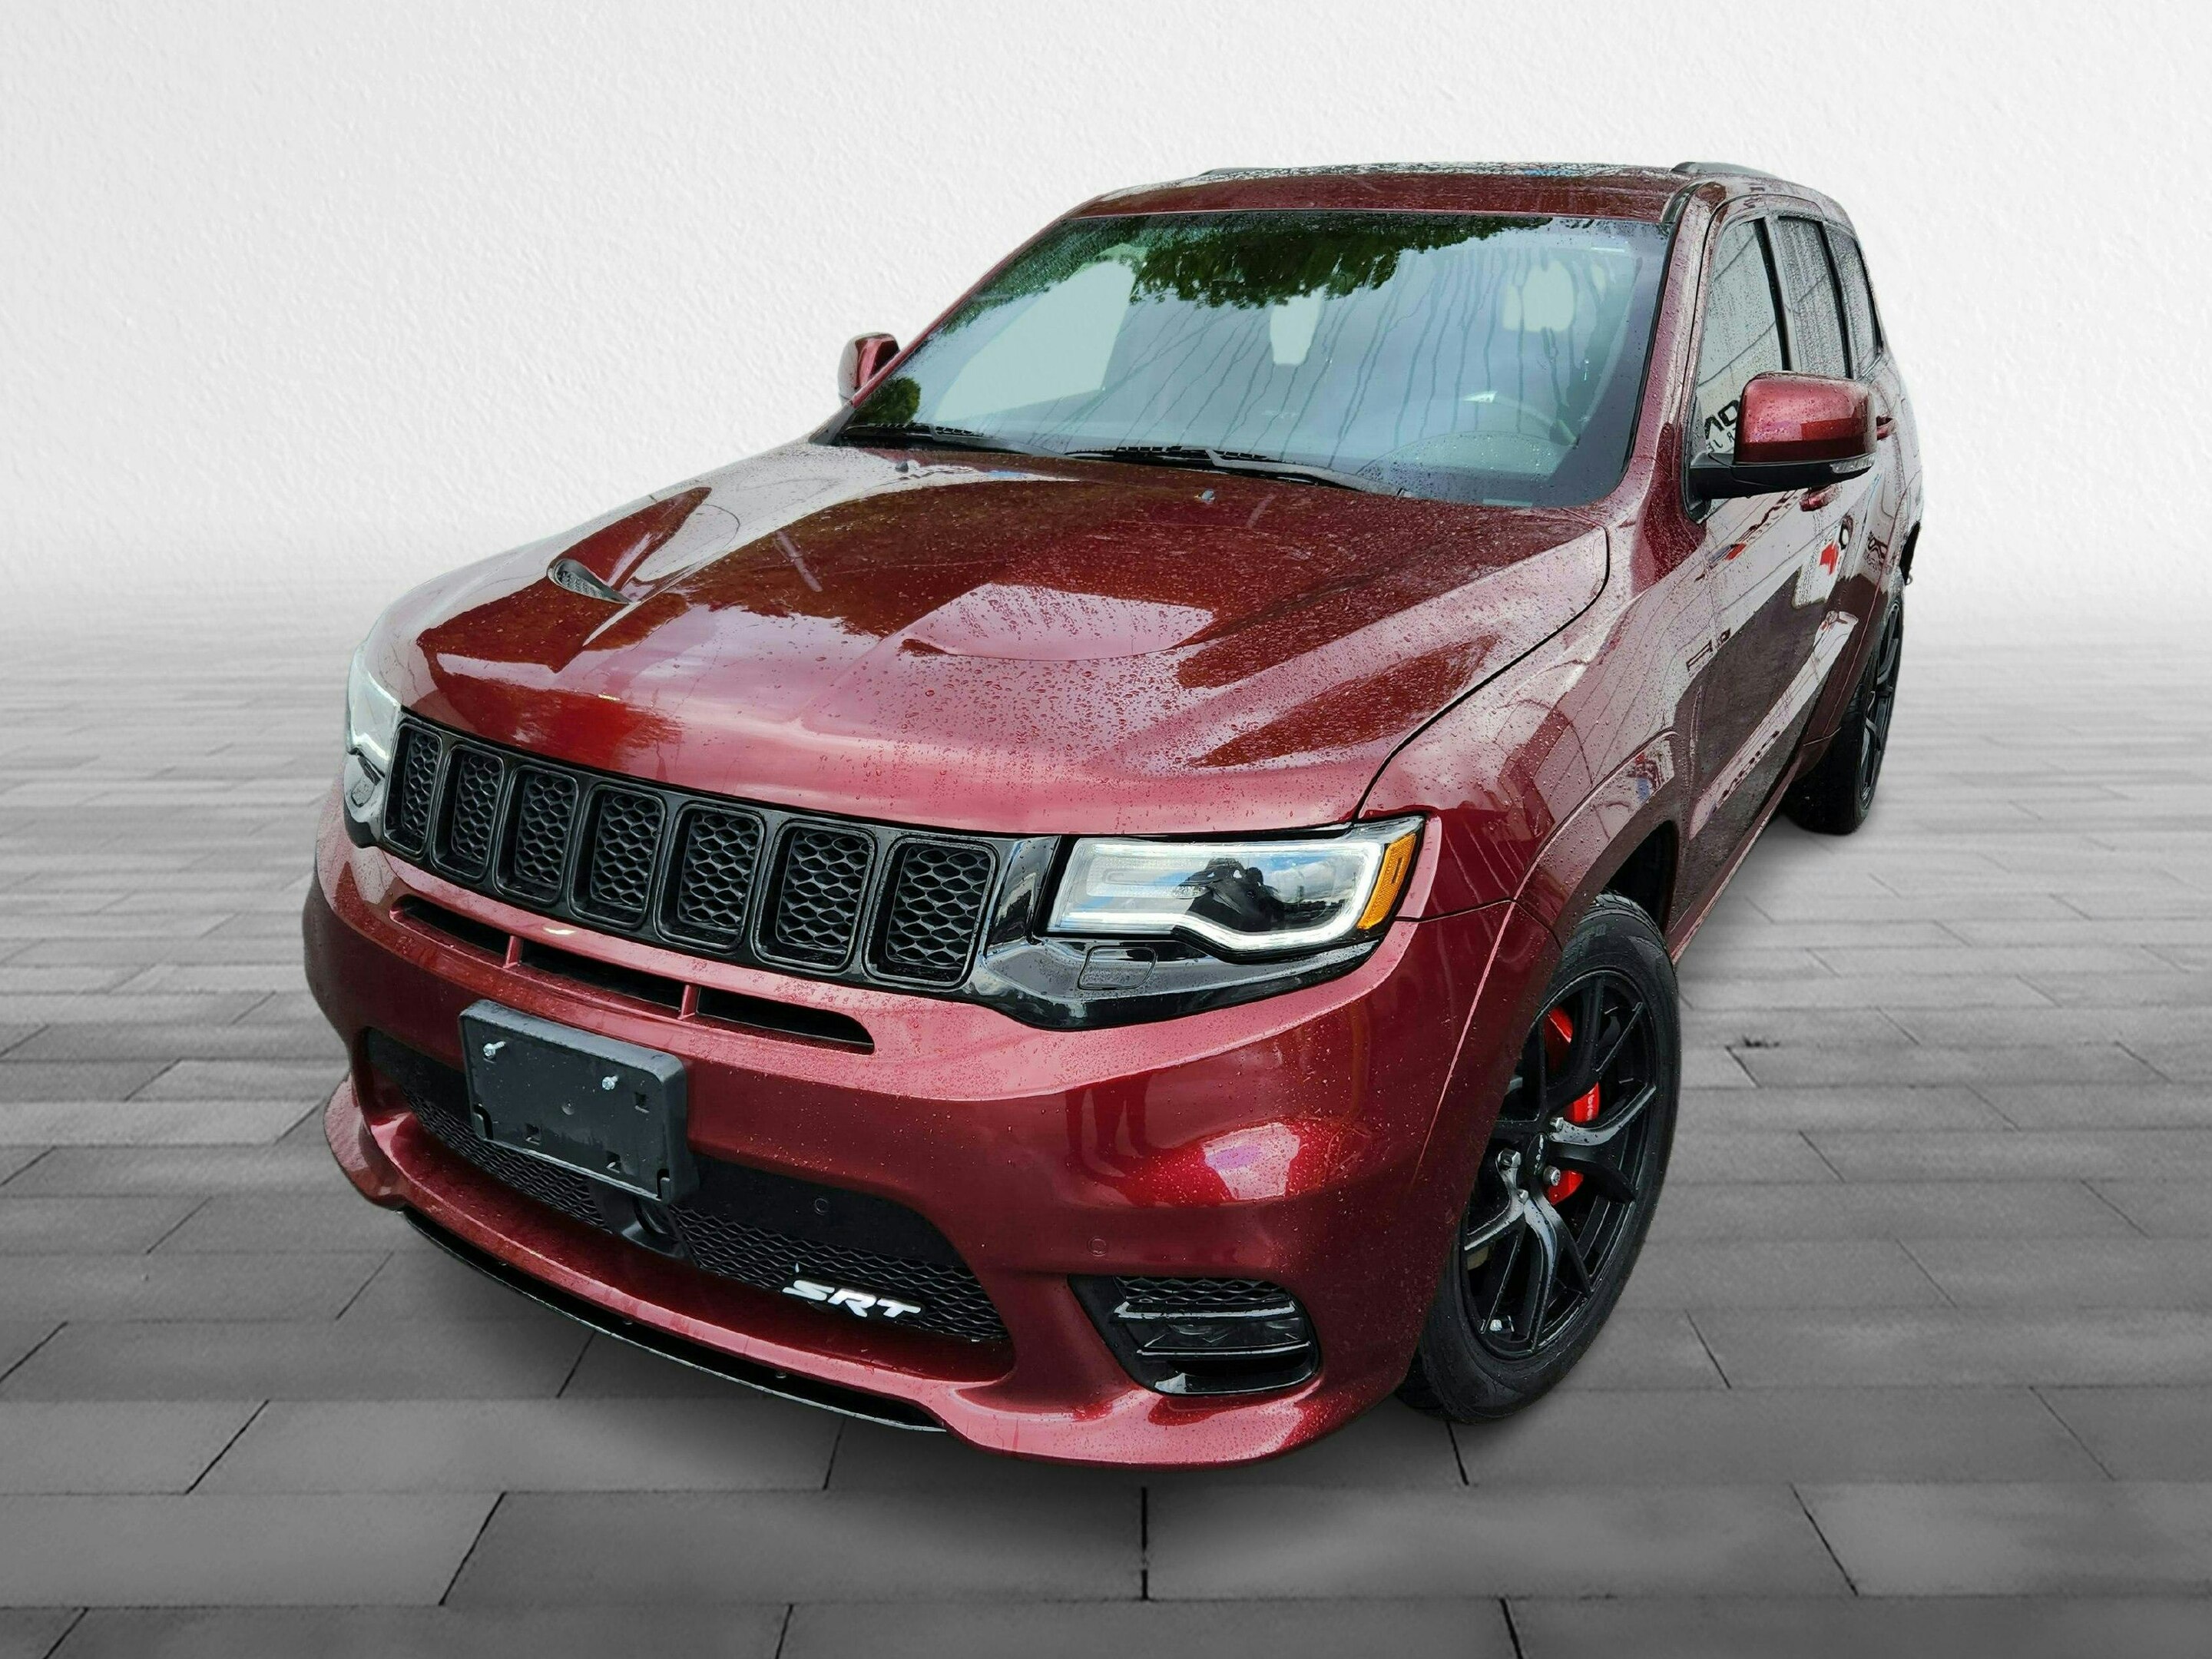 2020 Jeep Grand Cherokee SRT  -  Navigation [
  "Brembo Performance Brakes